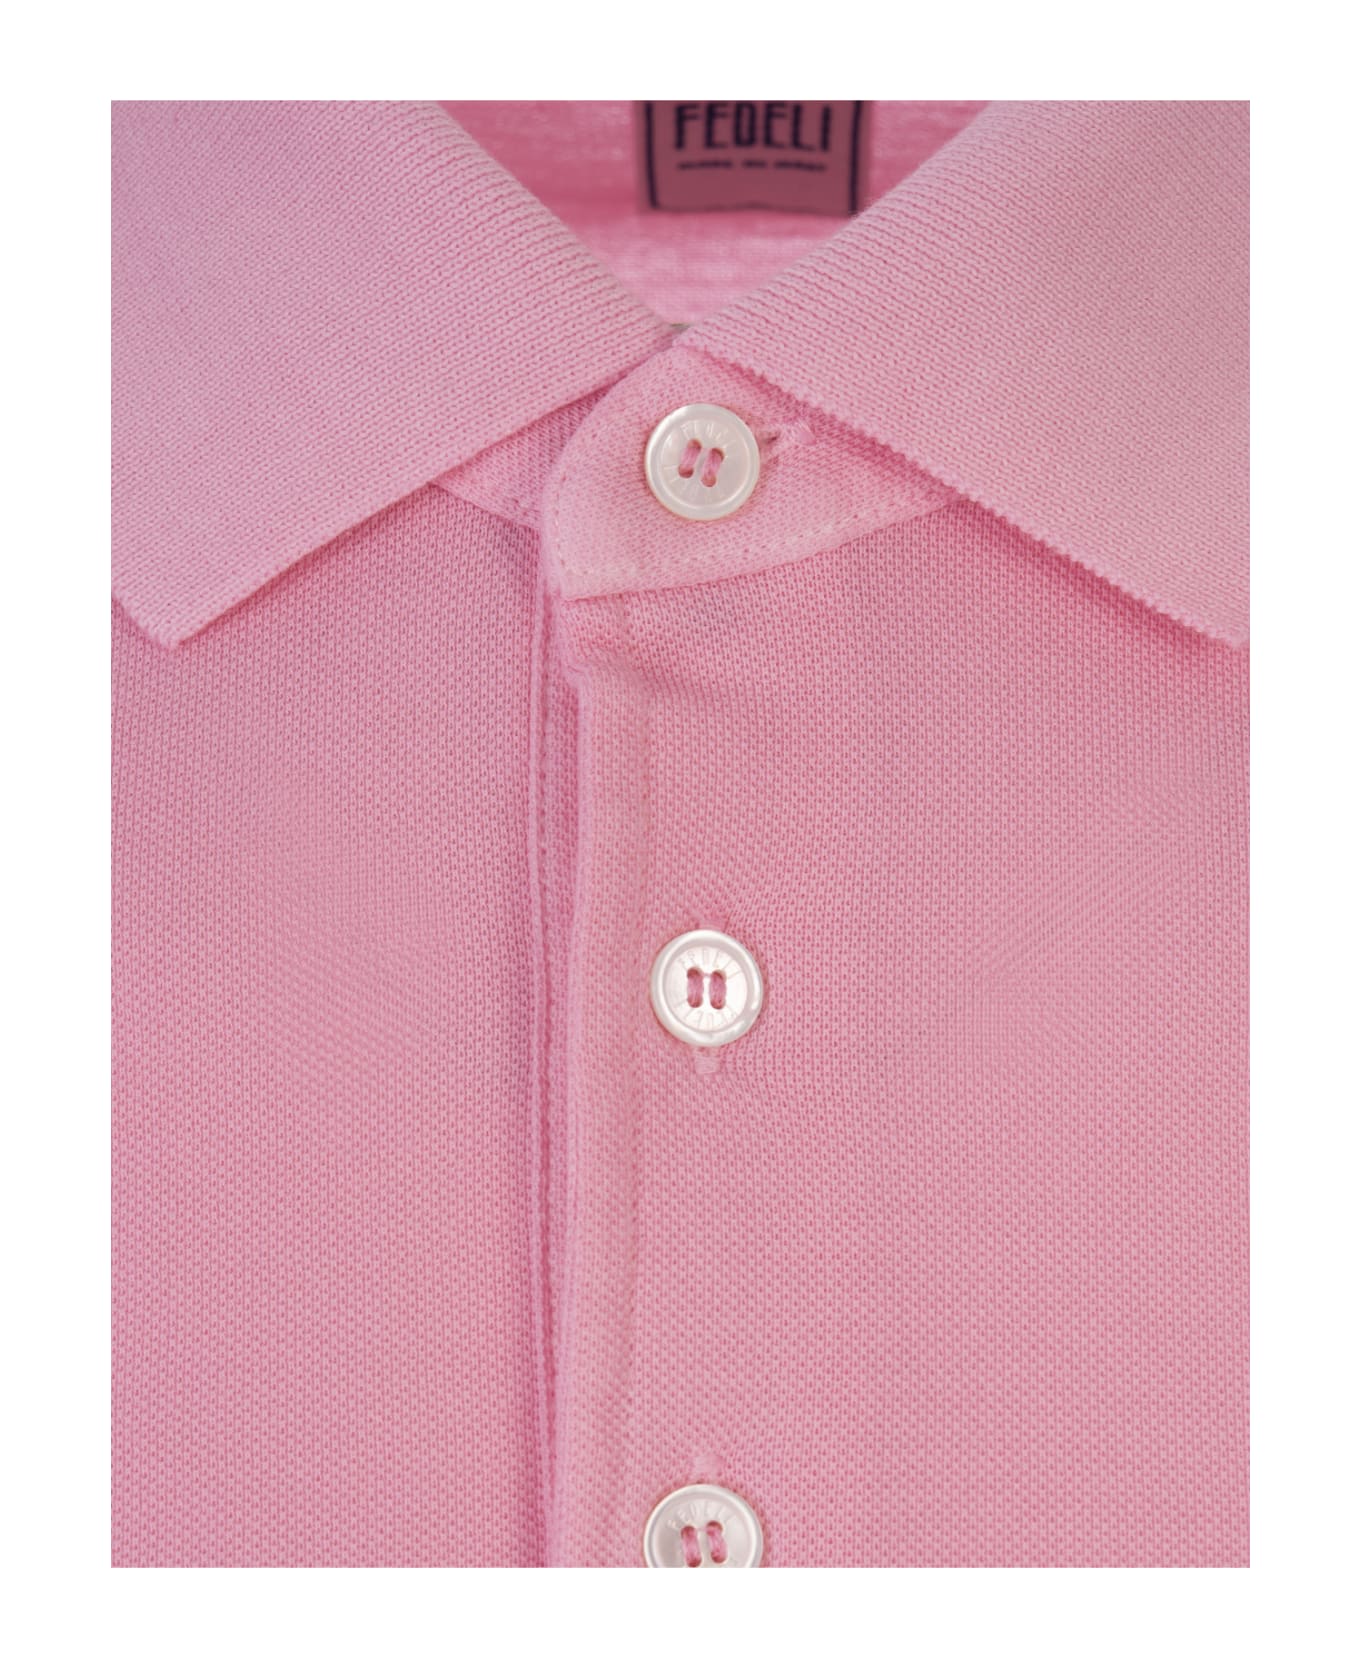 Fedeli Pink Light Cotton Piquet Polo Shirt - Pink ポロシャツ